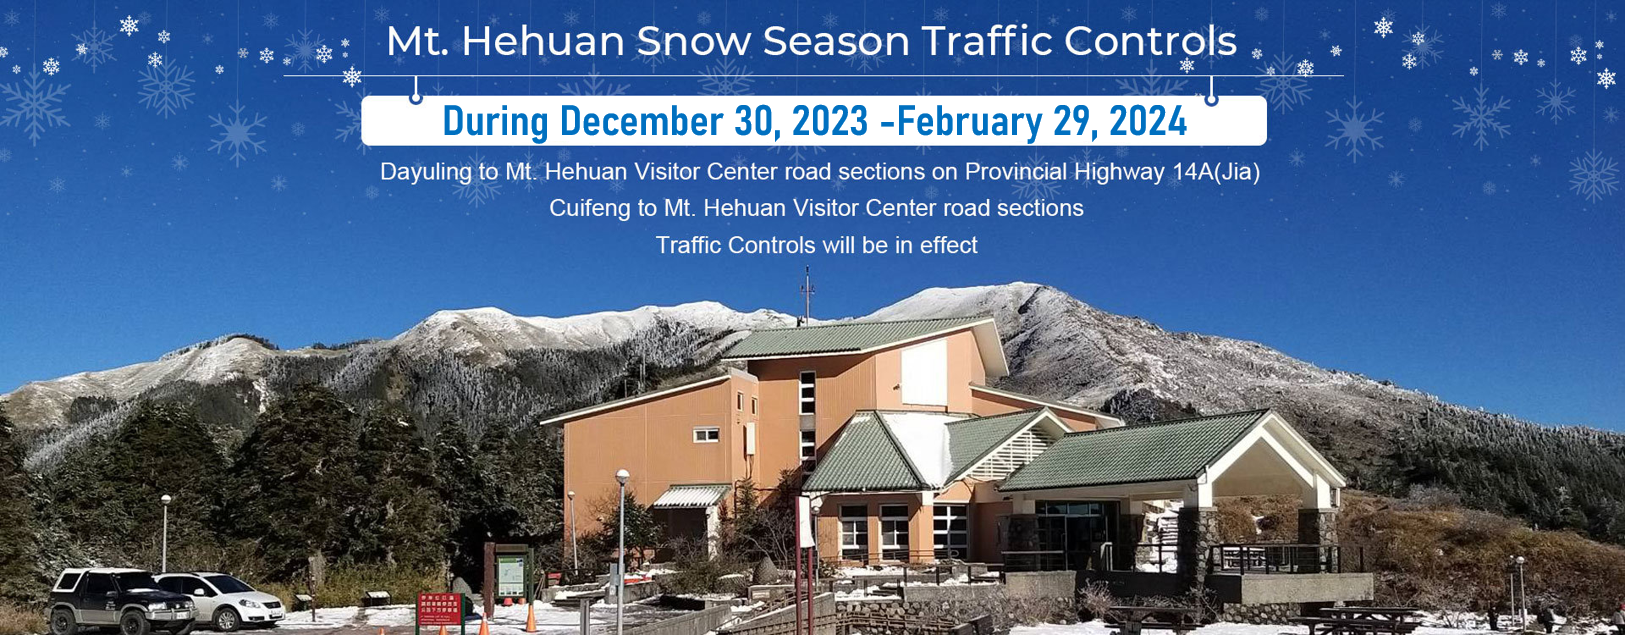 Mt. Hehuan Snow Season Traffic Control Info